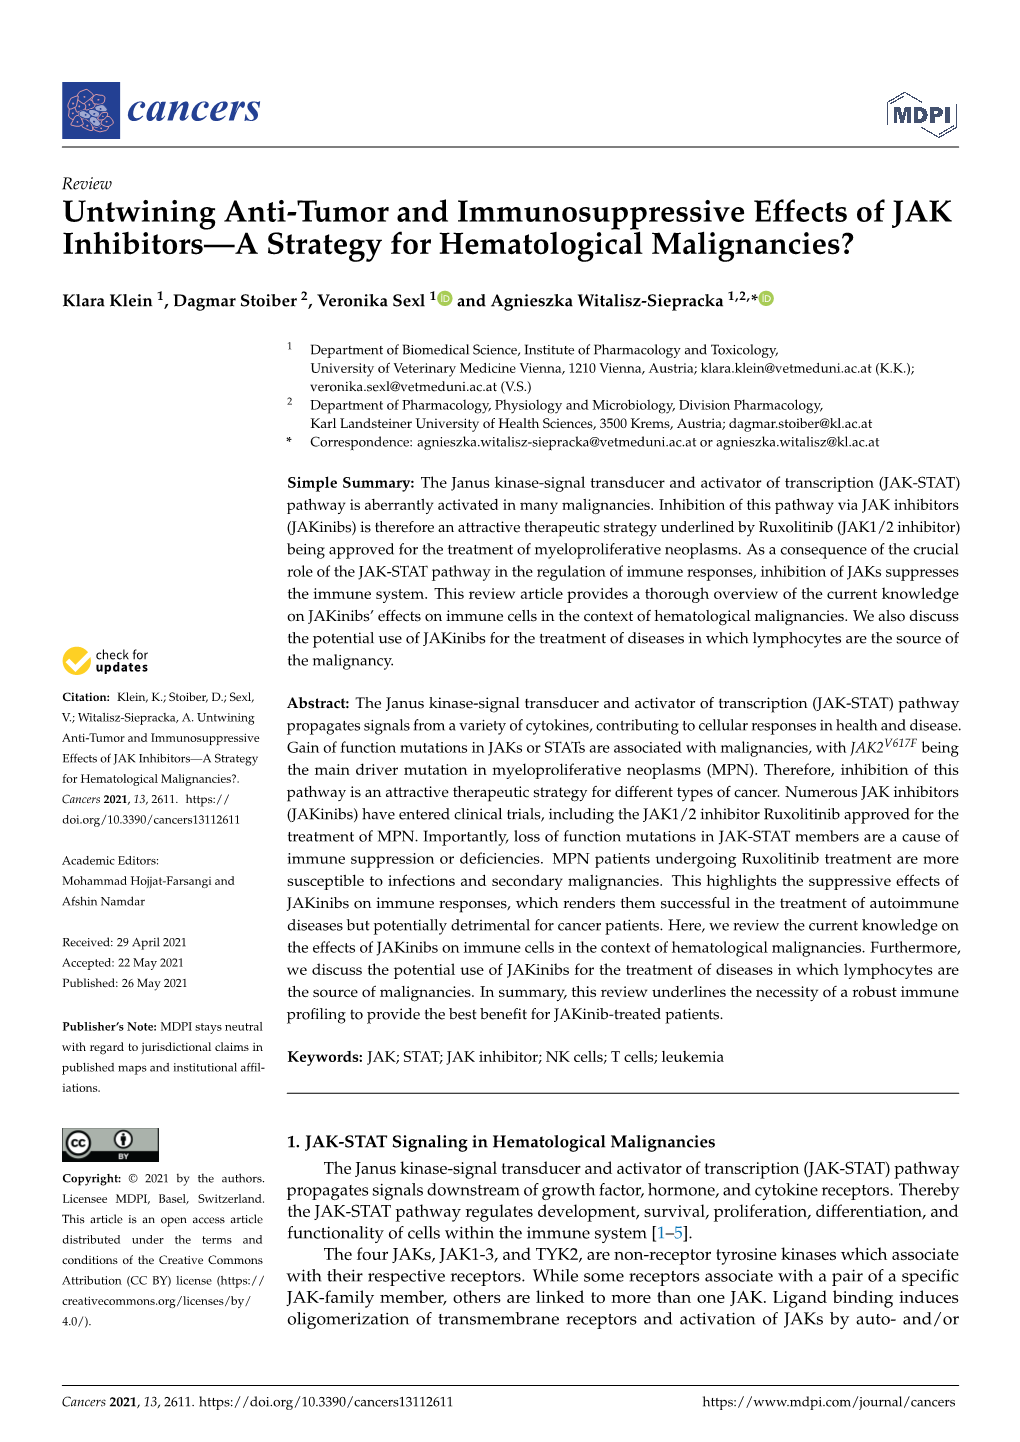 Untwining Anti-Tumor and Immunosuppressive Effects of JAK Inhibitors—A Strategy for Hematological Malignancies?